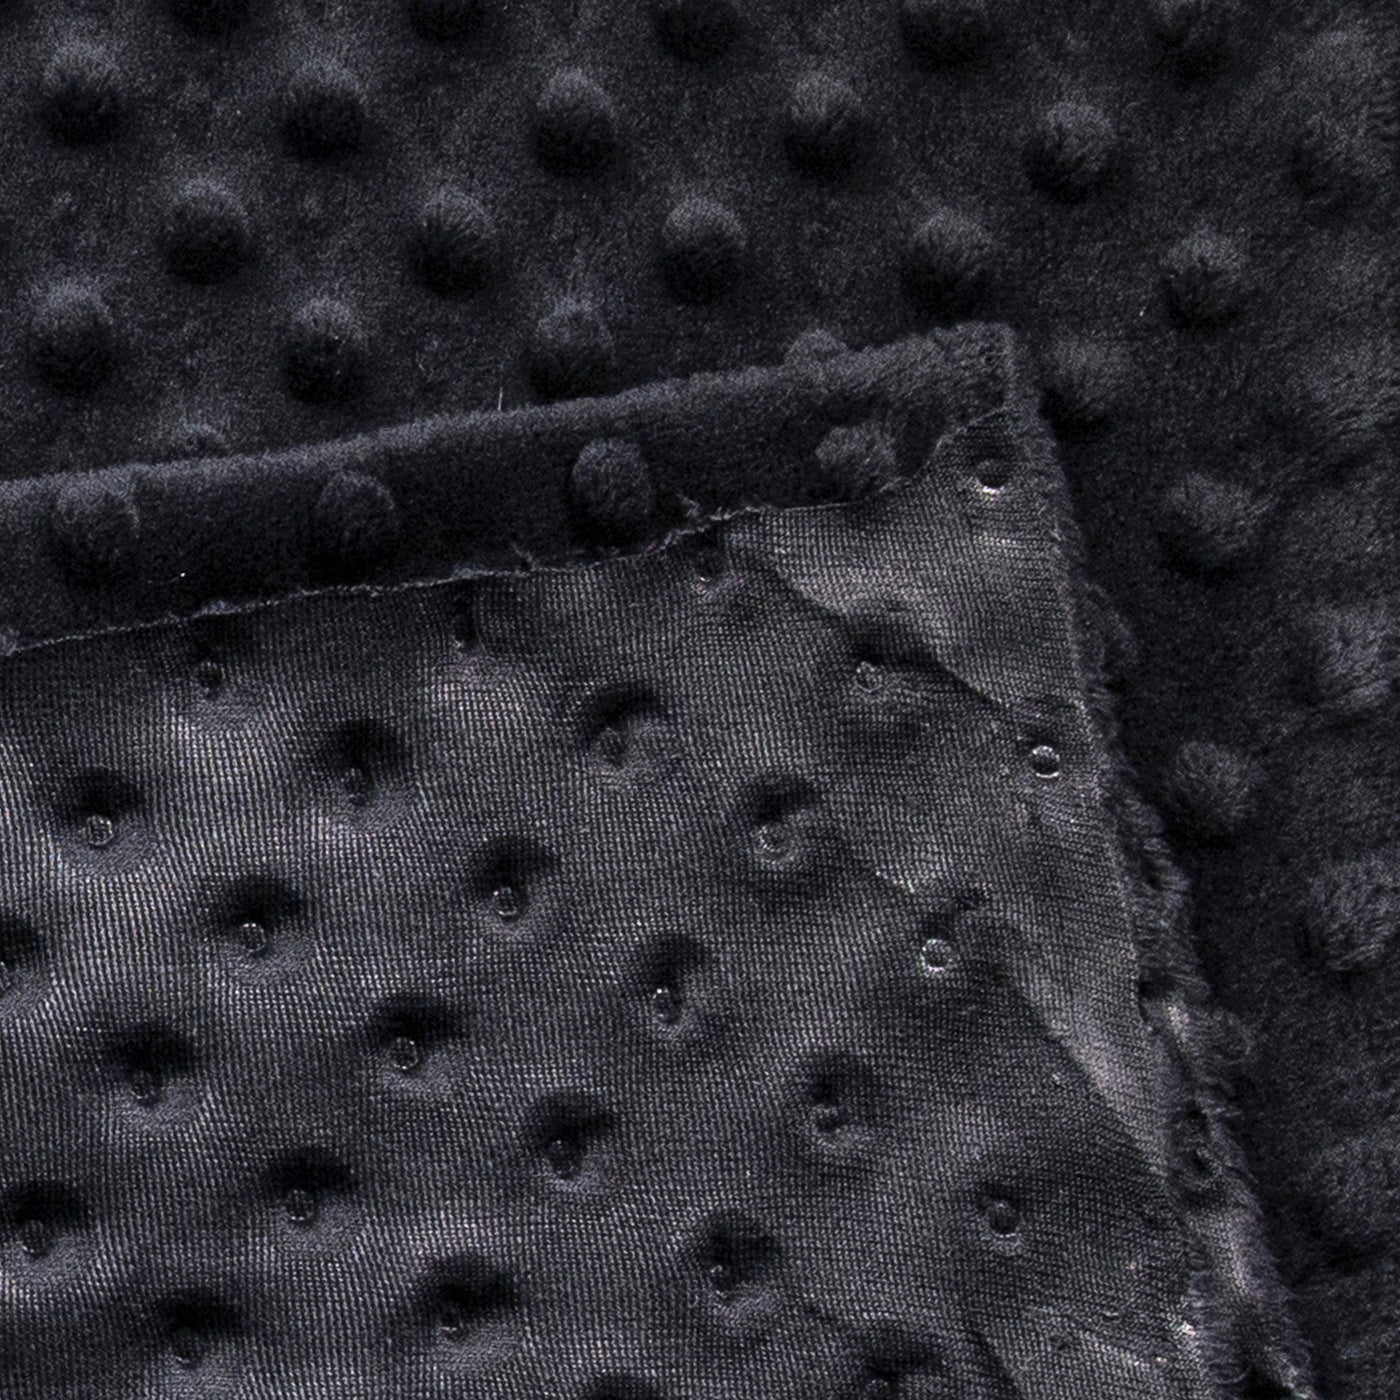 Minky Dimple Dot Fabric - Black - FabricLA.com